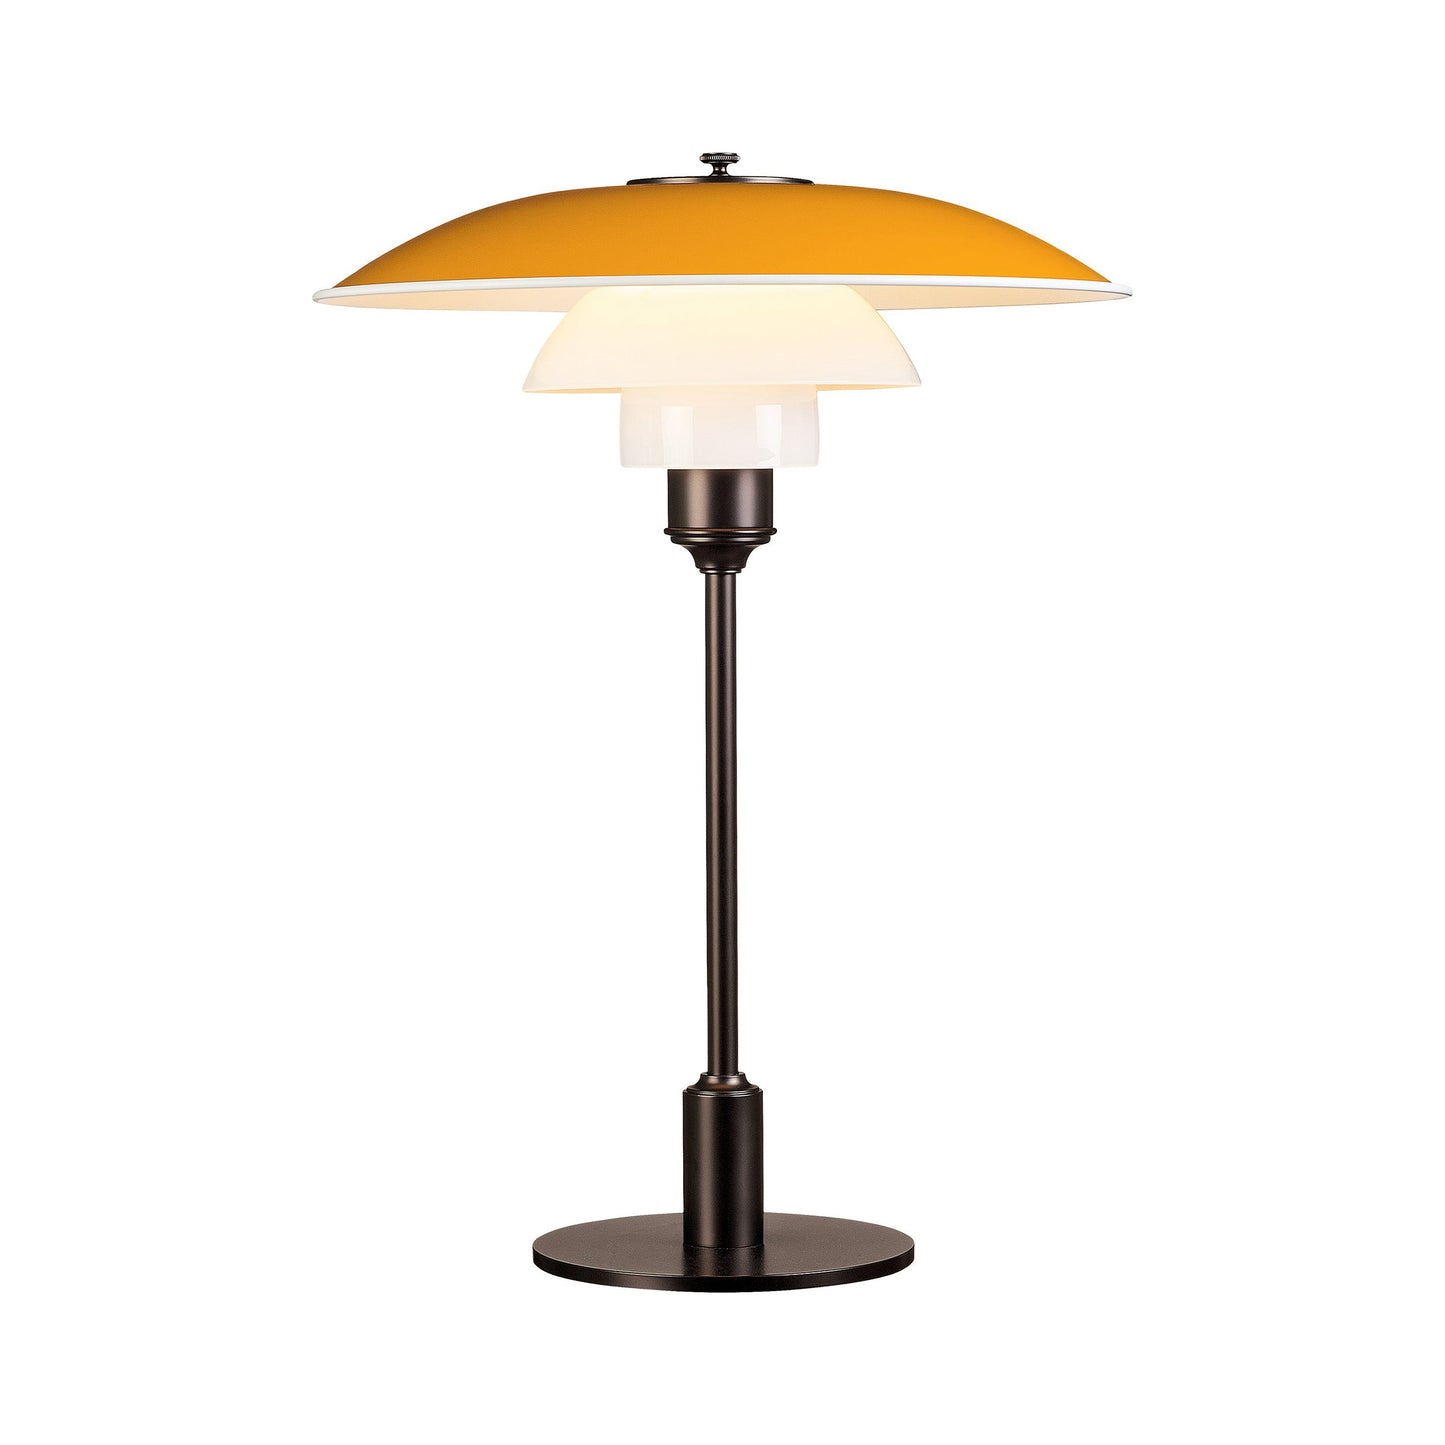 PH 3-2 Table Lamp